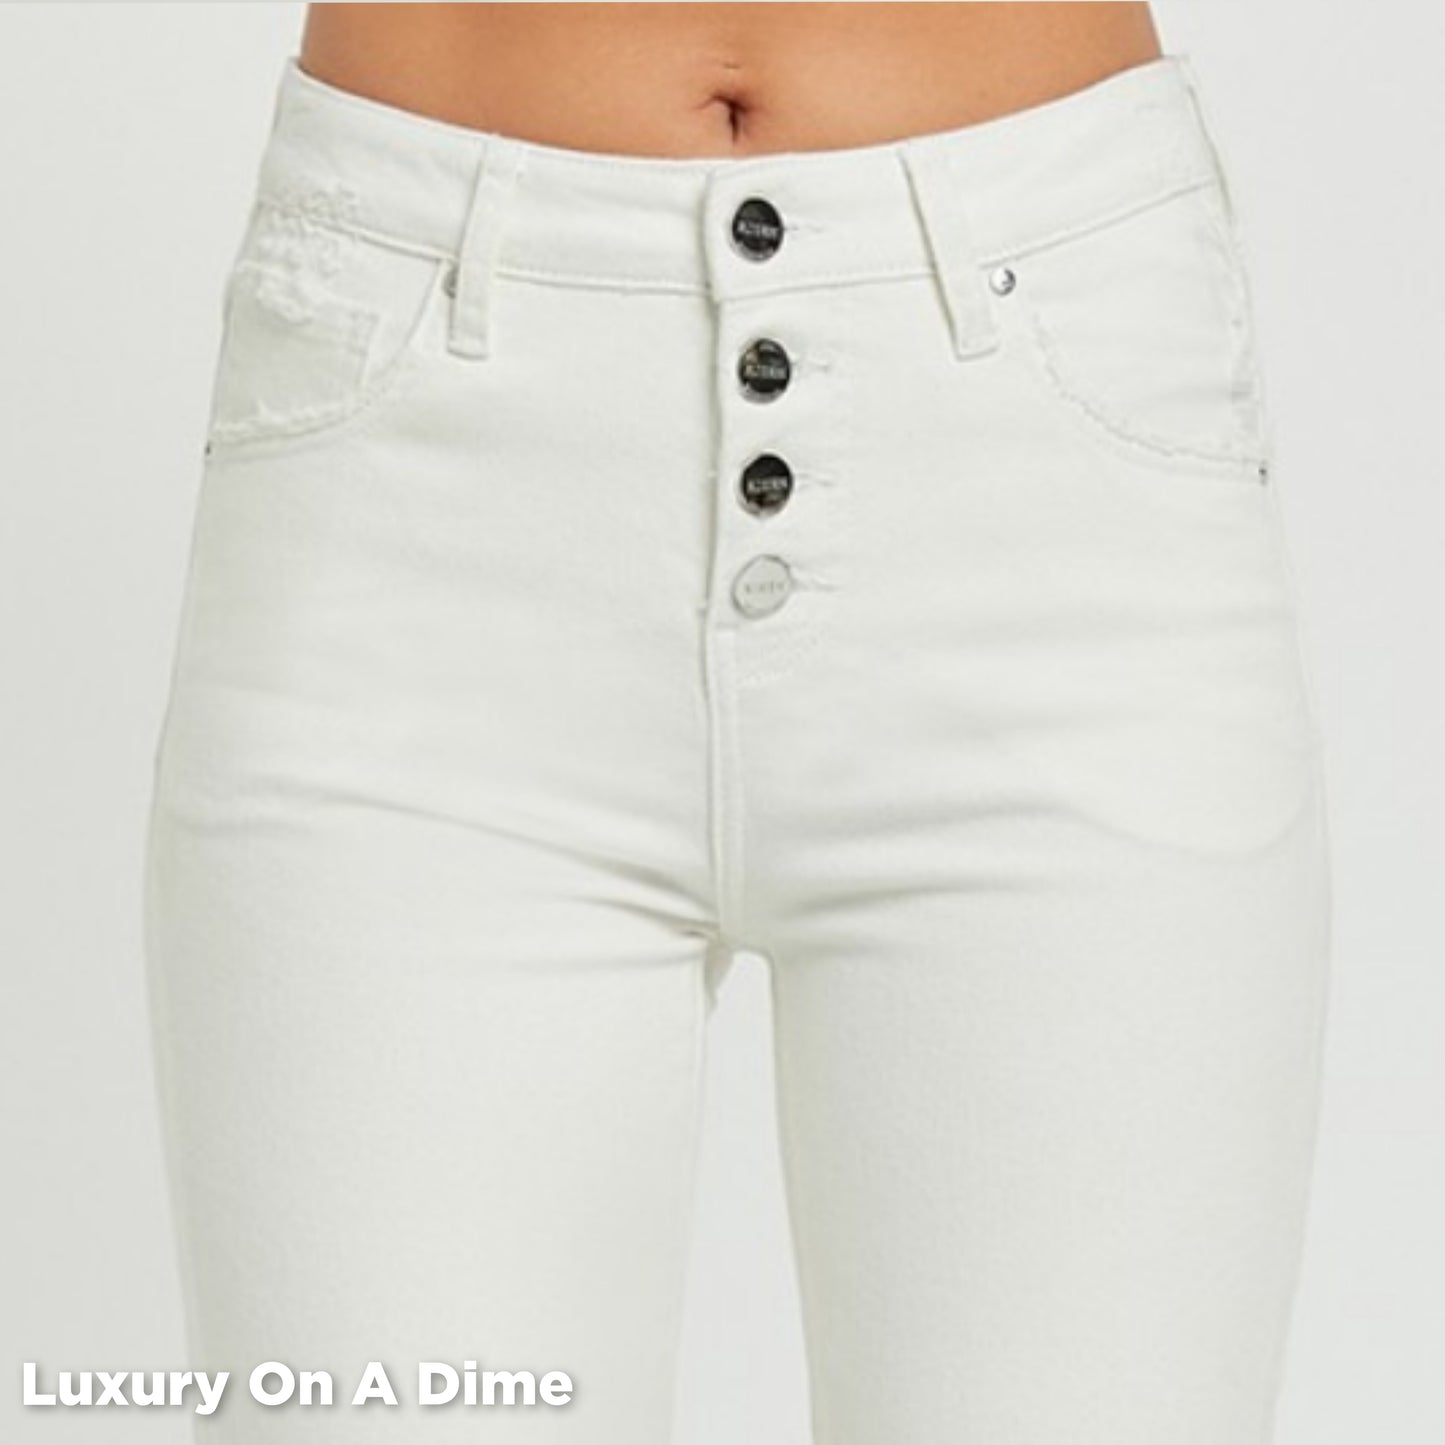 RISEN Tummy Control Mid-Rise Straight Leg Distressed Raw Hem Jeans White Denim Pants